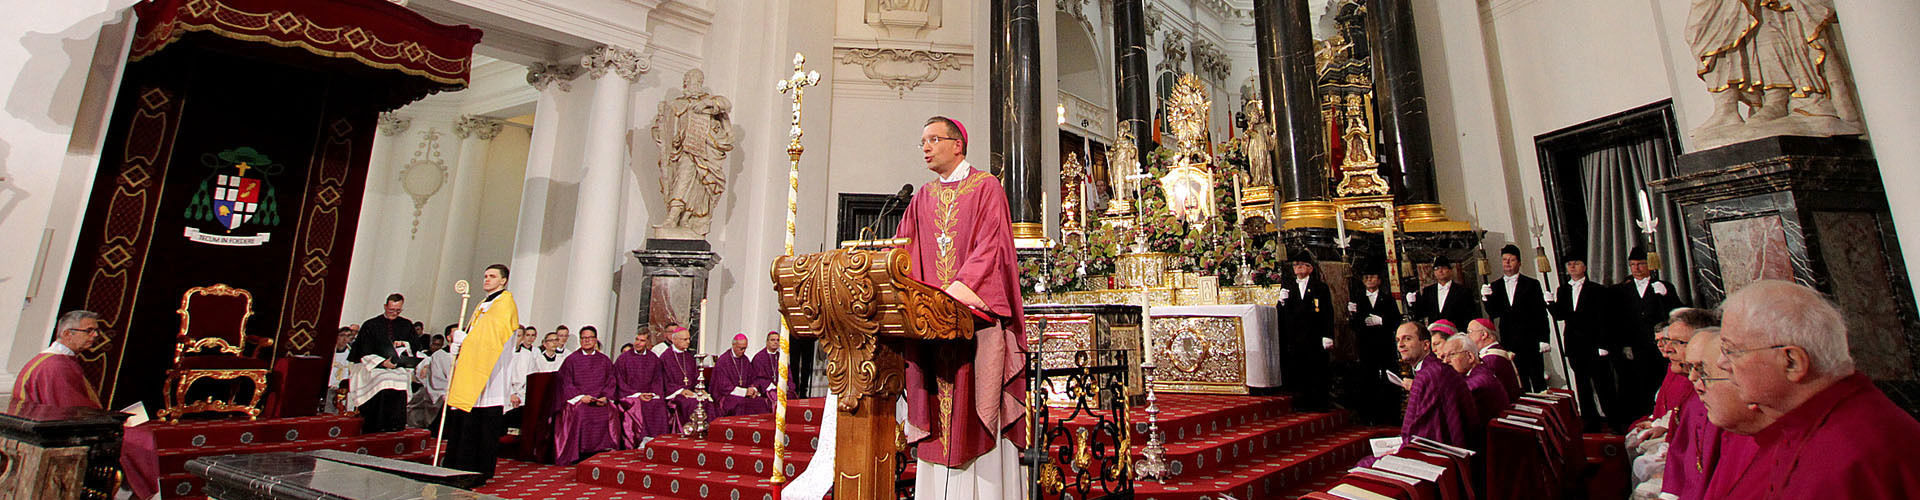 Amtseinführung Bischof Dr. Michael Gerber